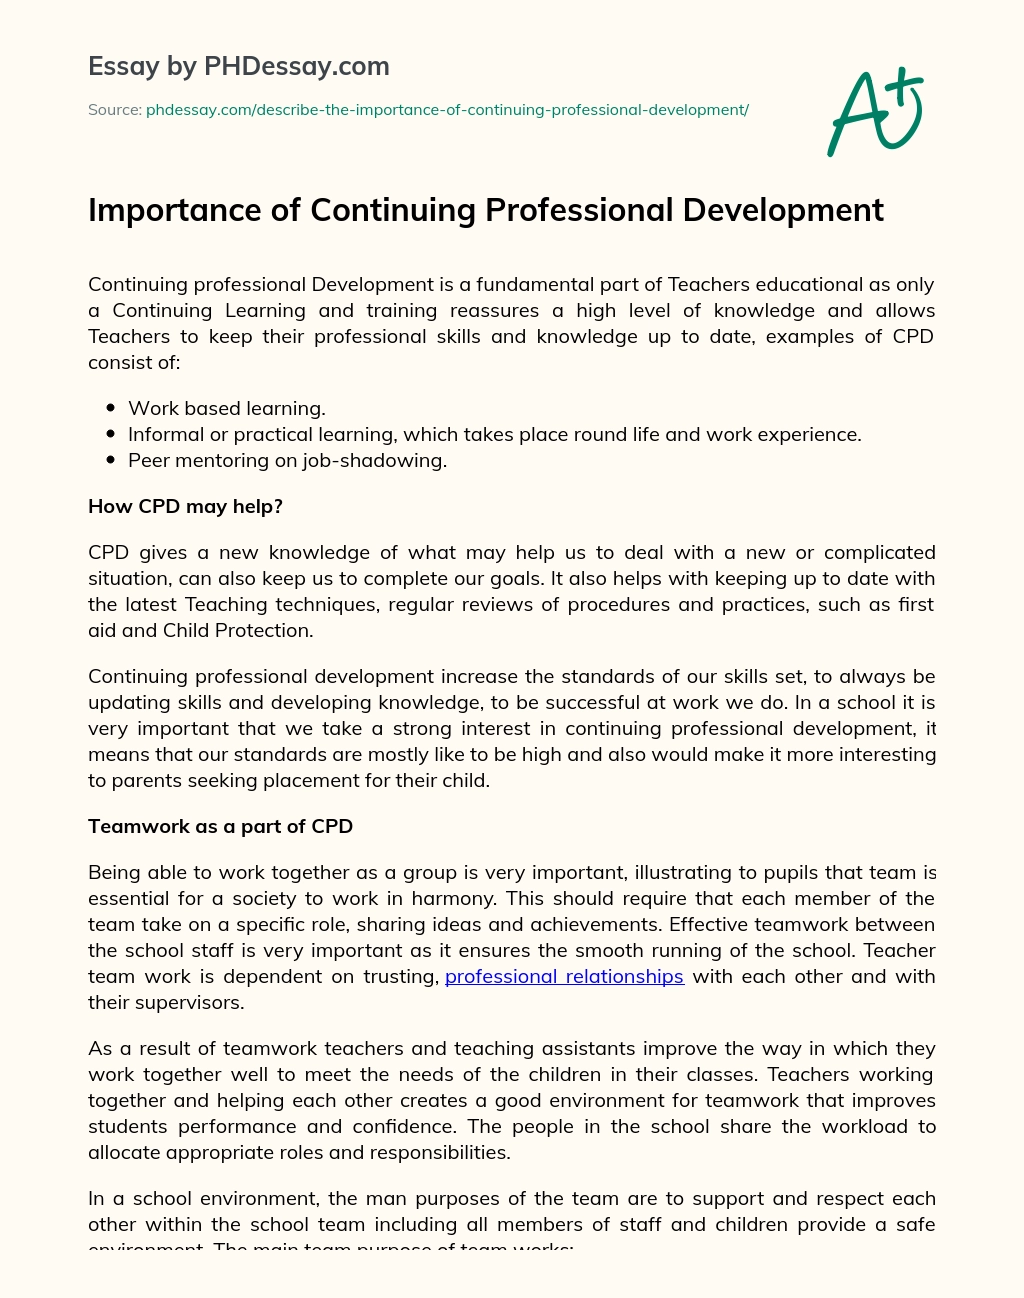 Importance of Continuing Professional Development essay